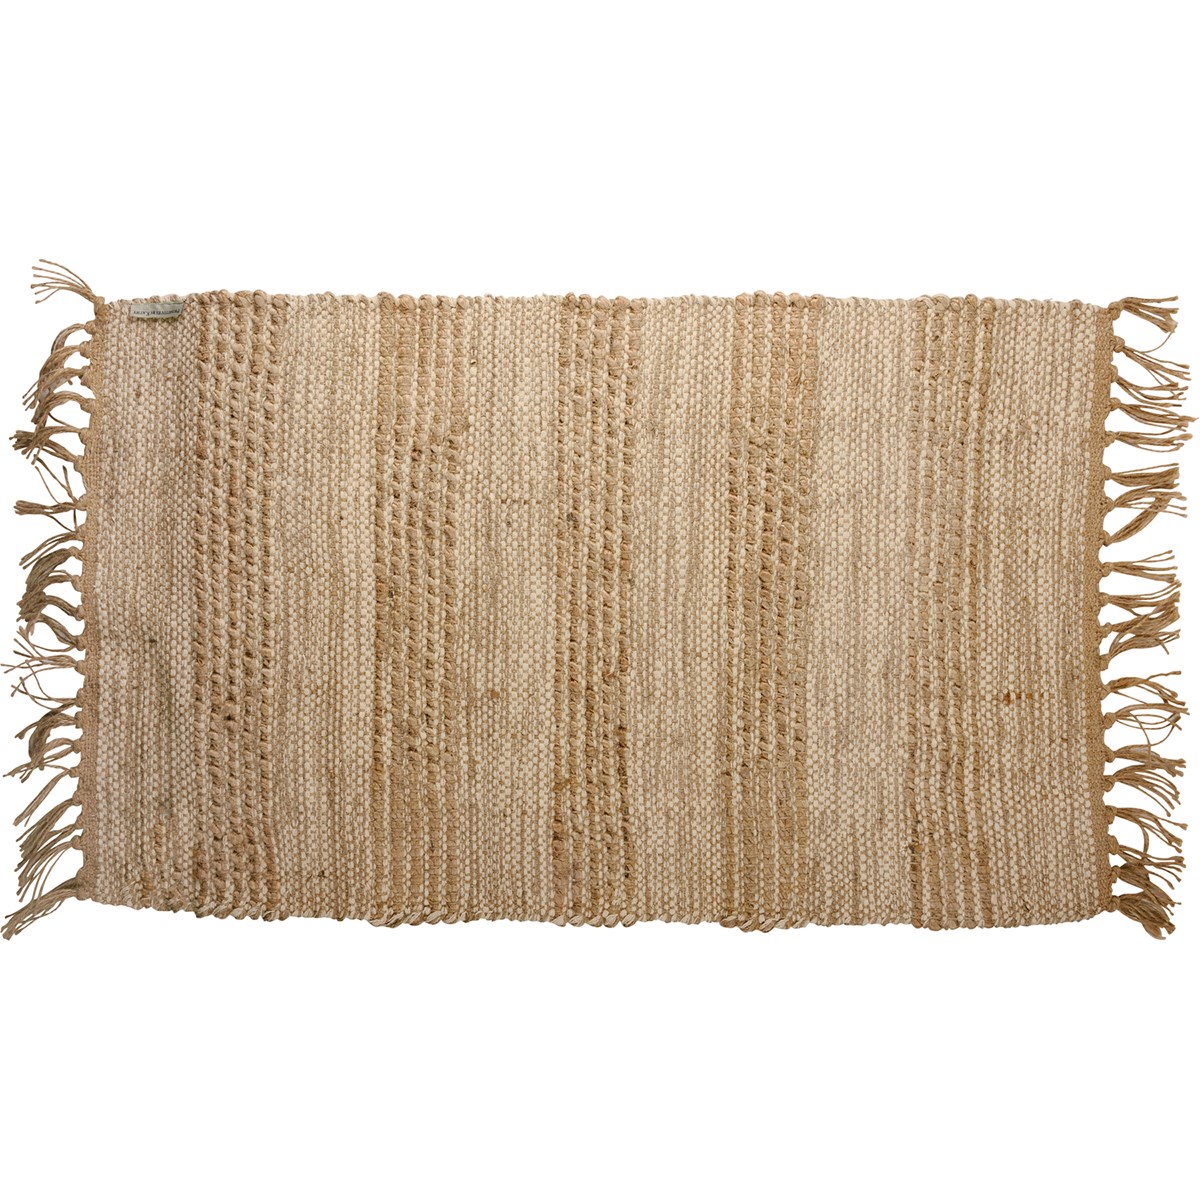 Cream Stripes Rug - Cotton, Jute, Latex skid-resistant backing